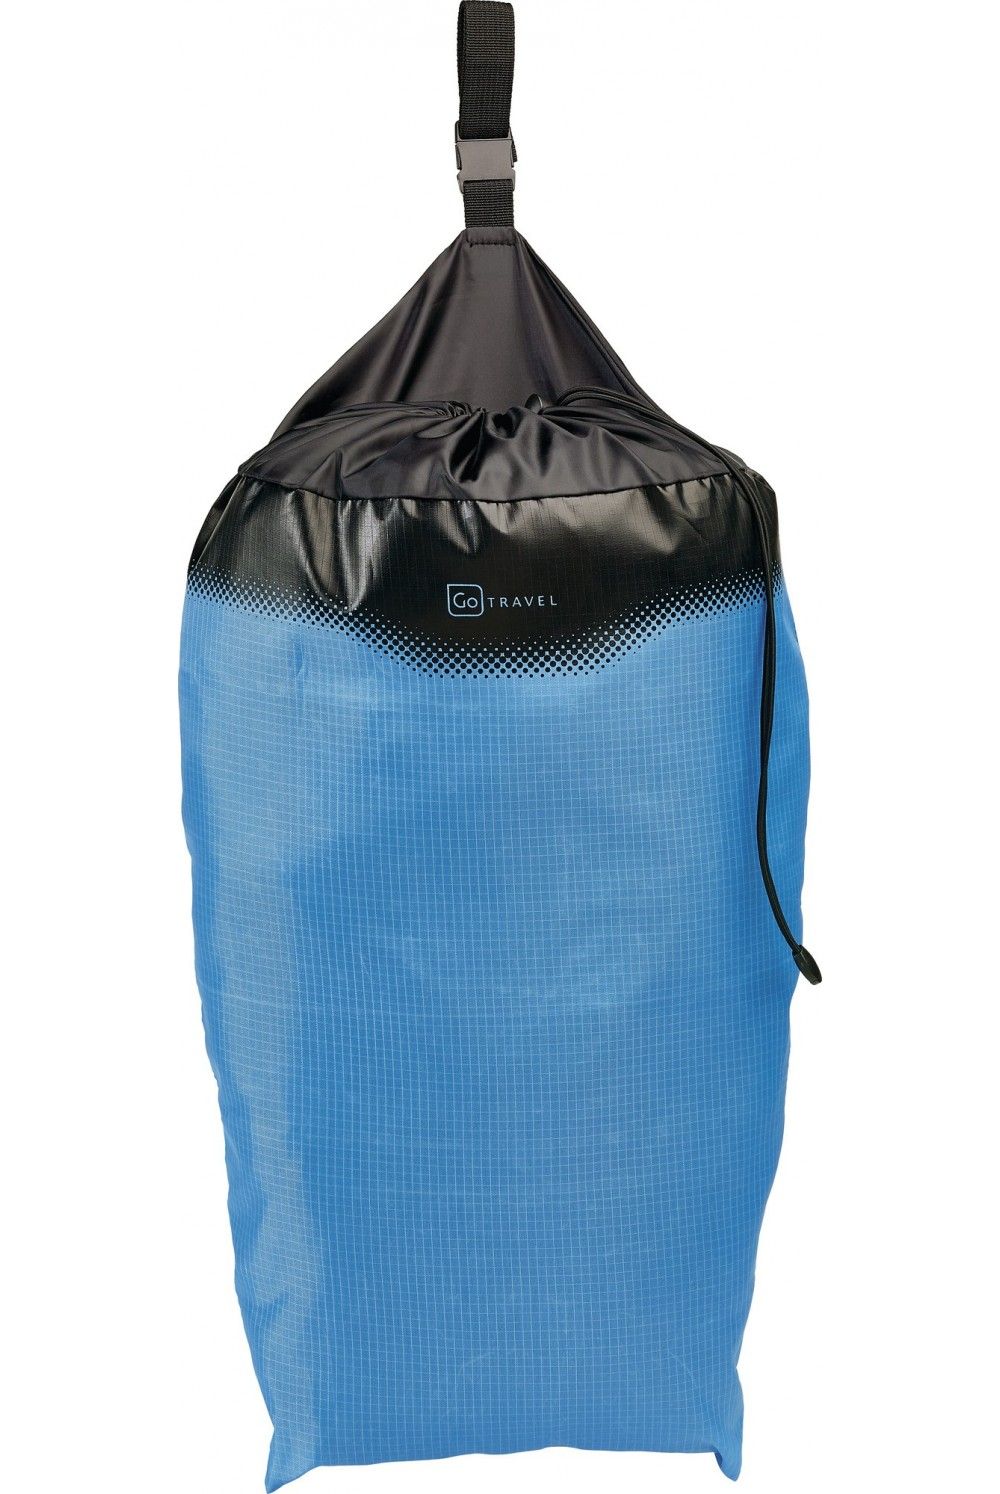 Go Travel laundry bag 15 liters